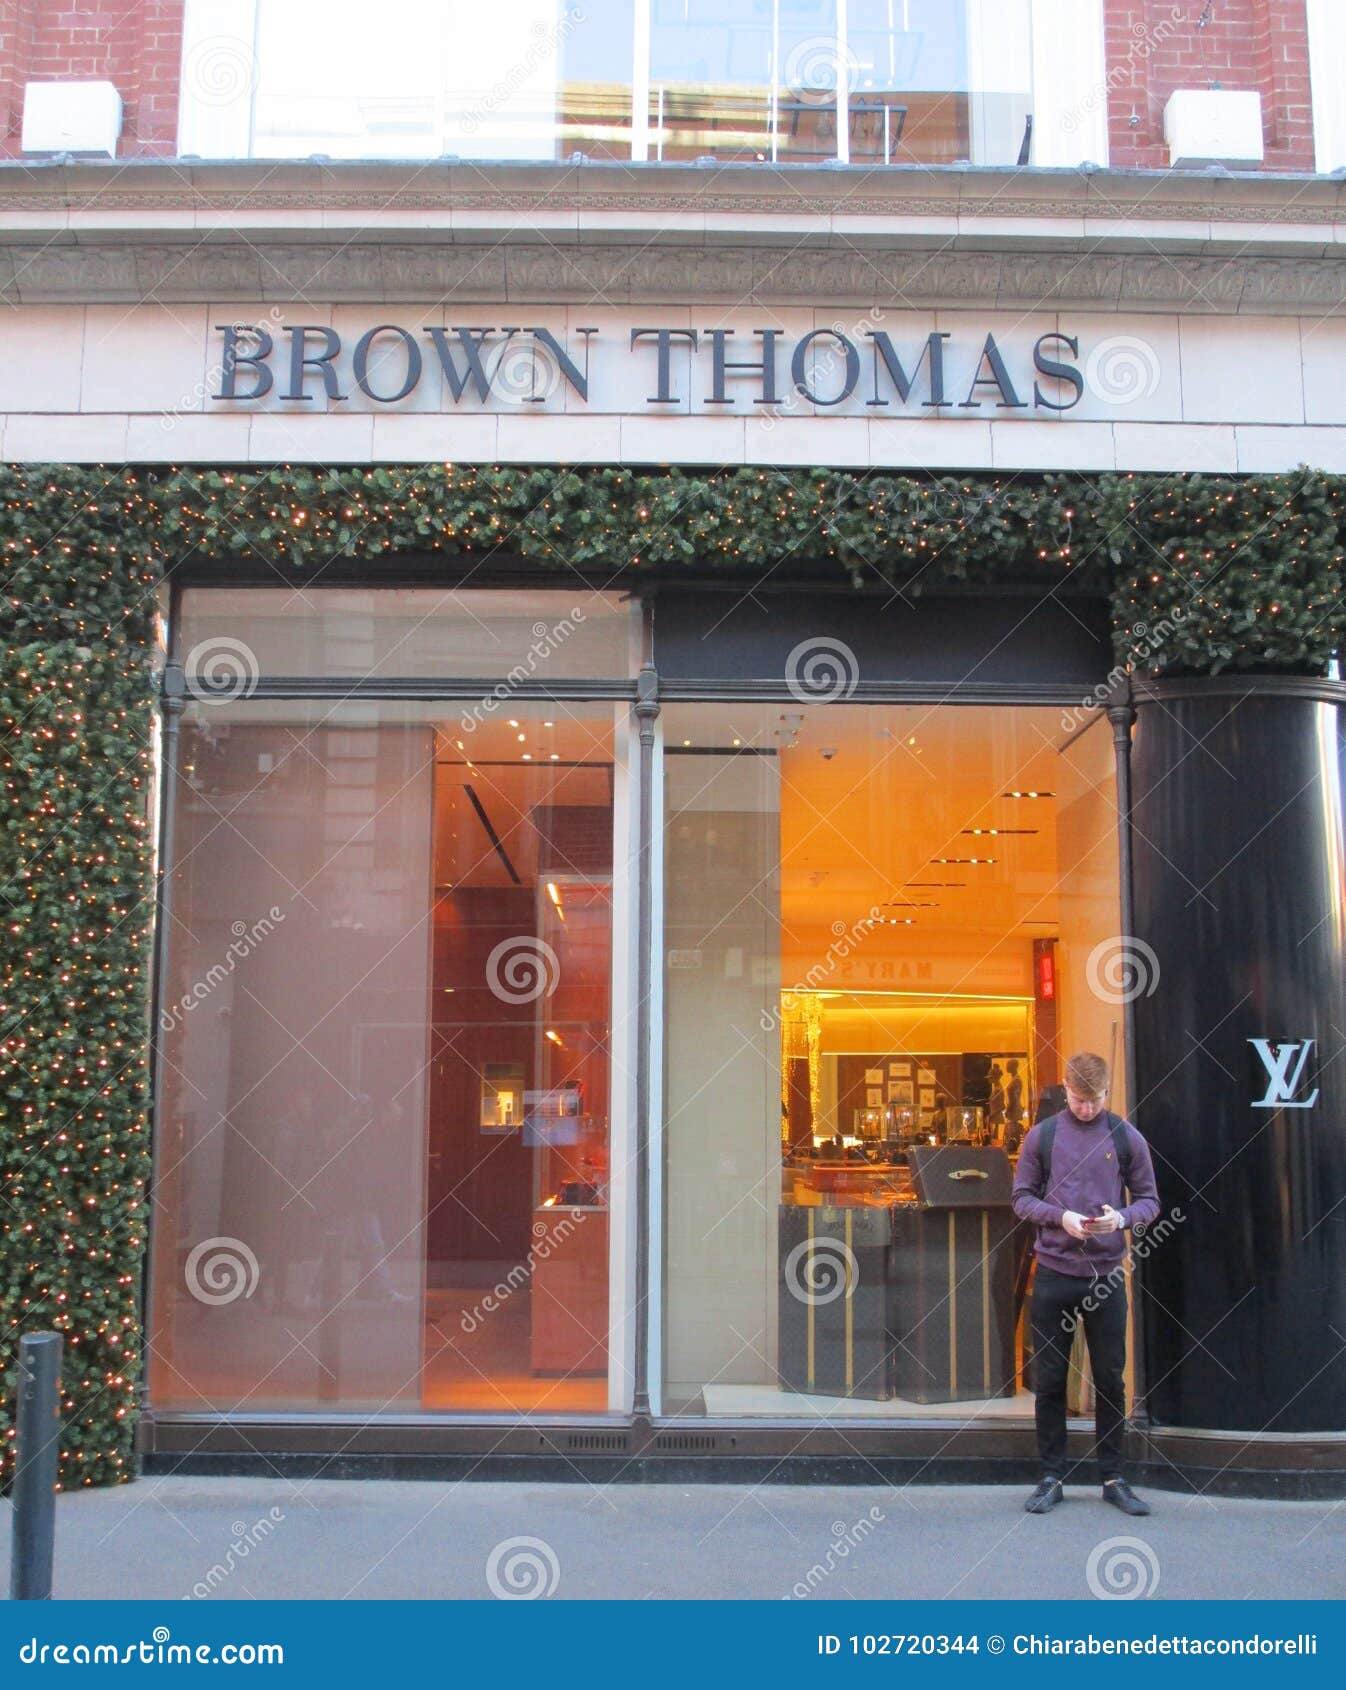 Louis Vuitton Dublin Brown Thomas Store, Ireland